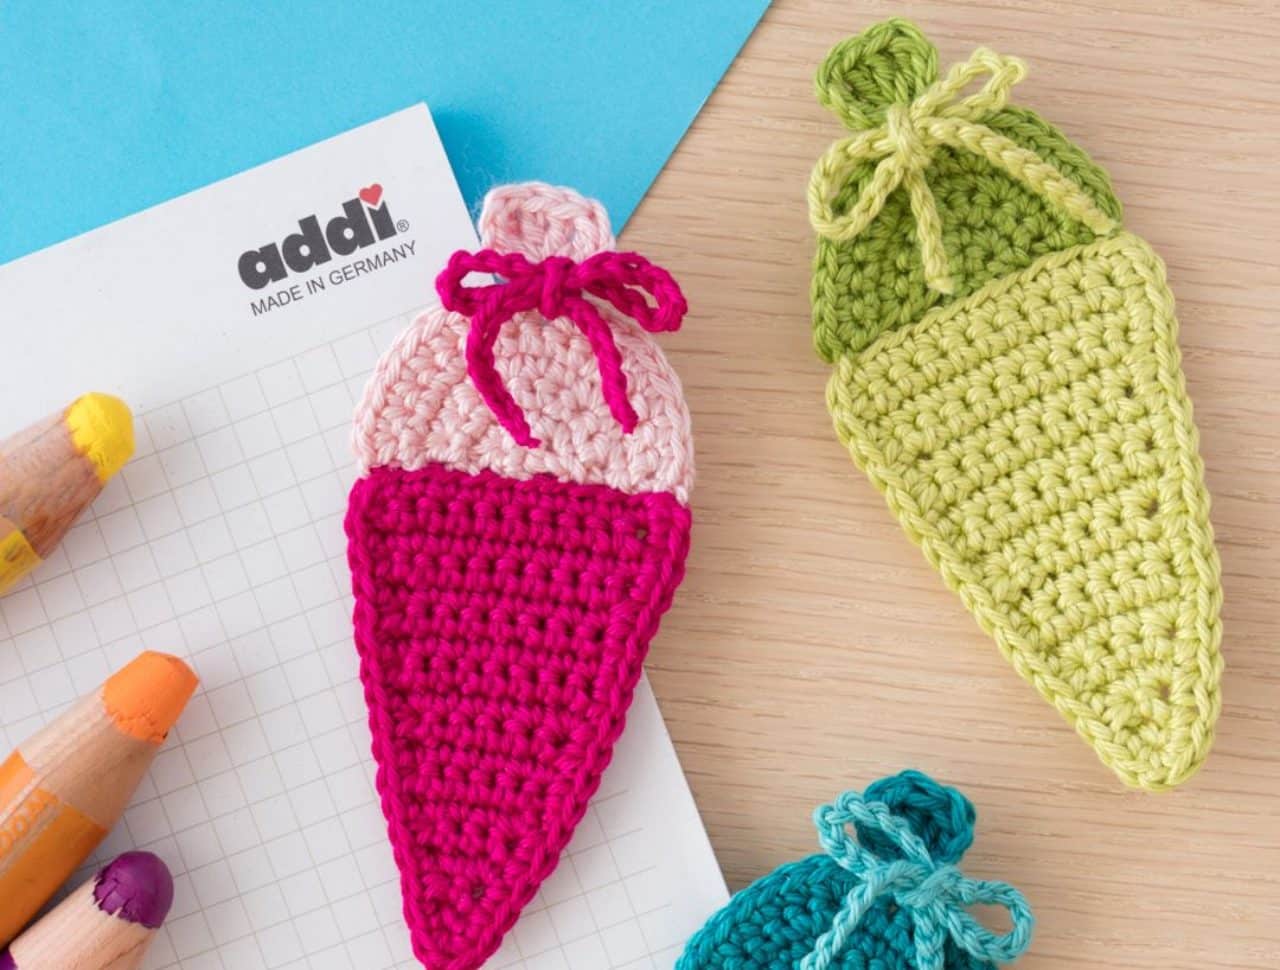 Instruction CaroSchultüte crochet 8 mini school bags crochet